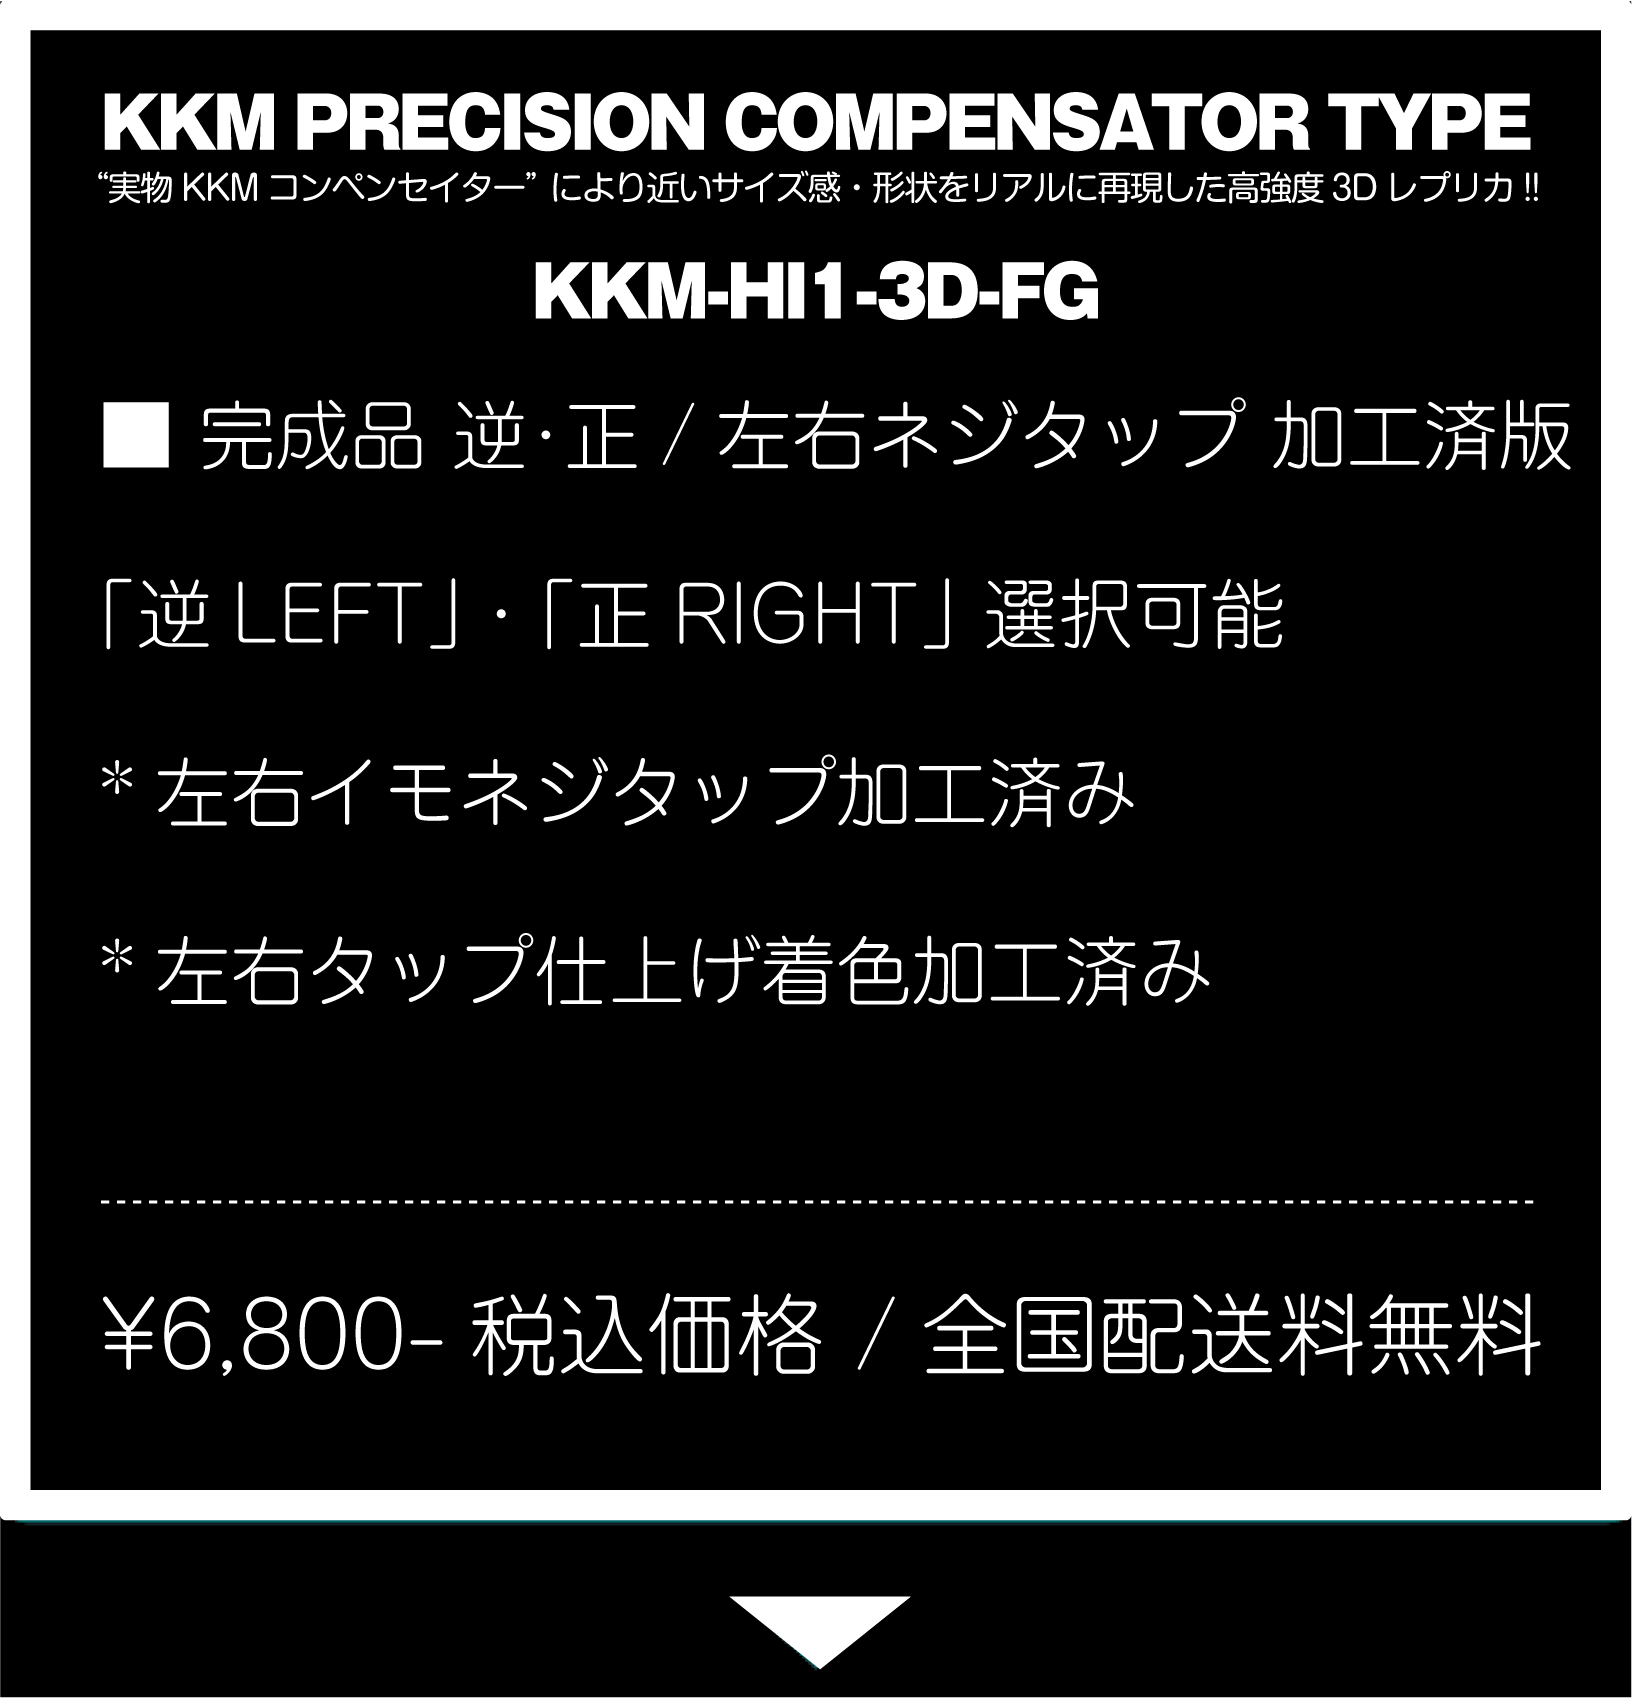 KKM PRECISION COMPENSATOR TYPE AIR SOFT HILOGstore KKM-HI1-3D-FG